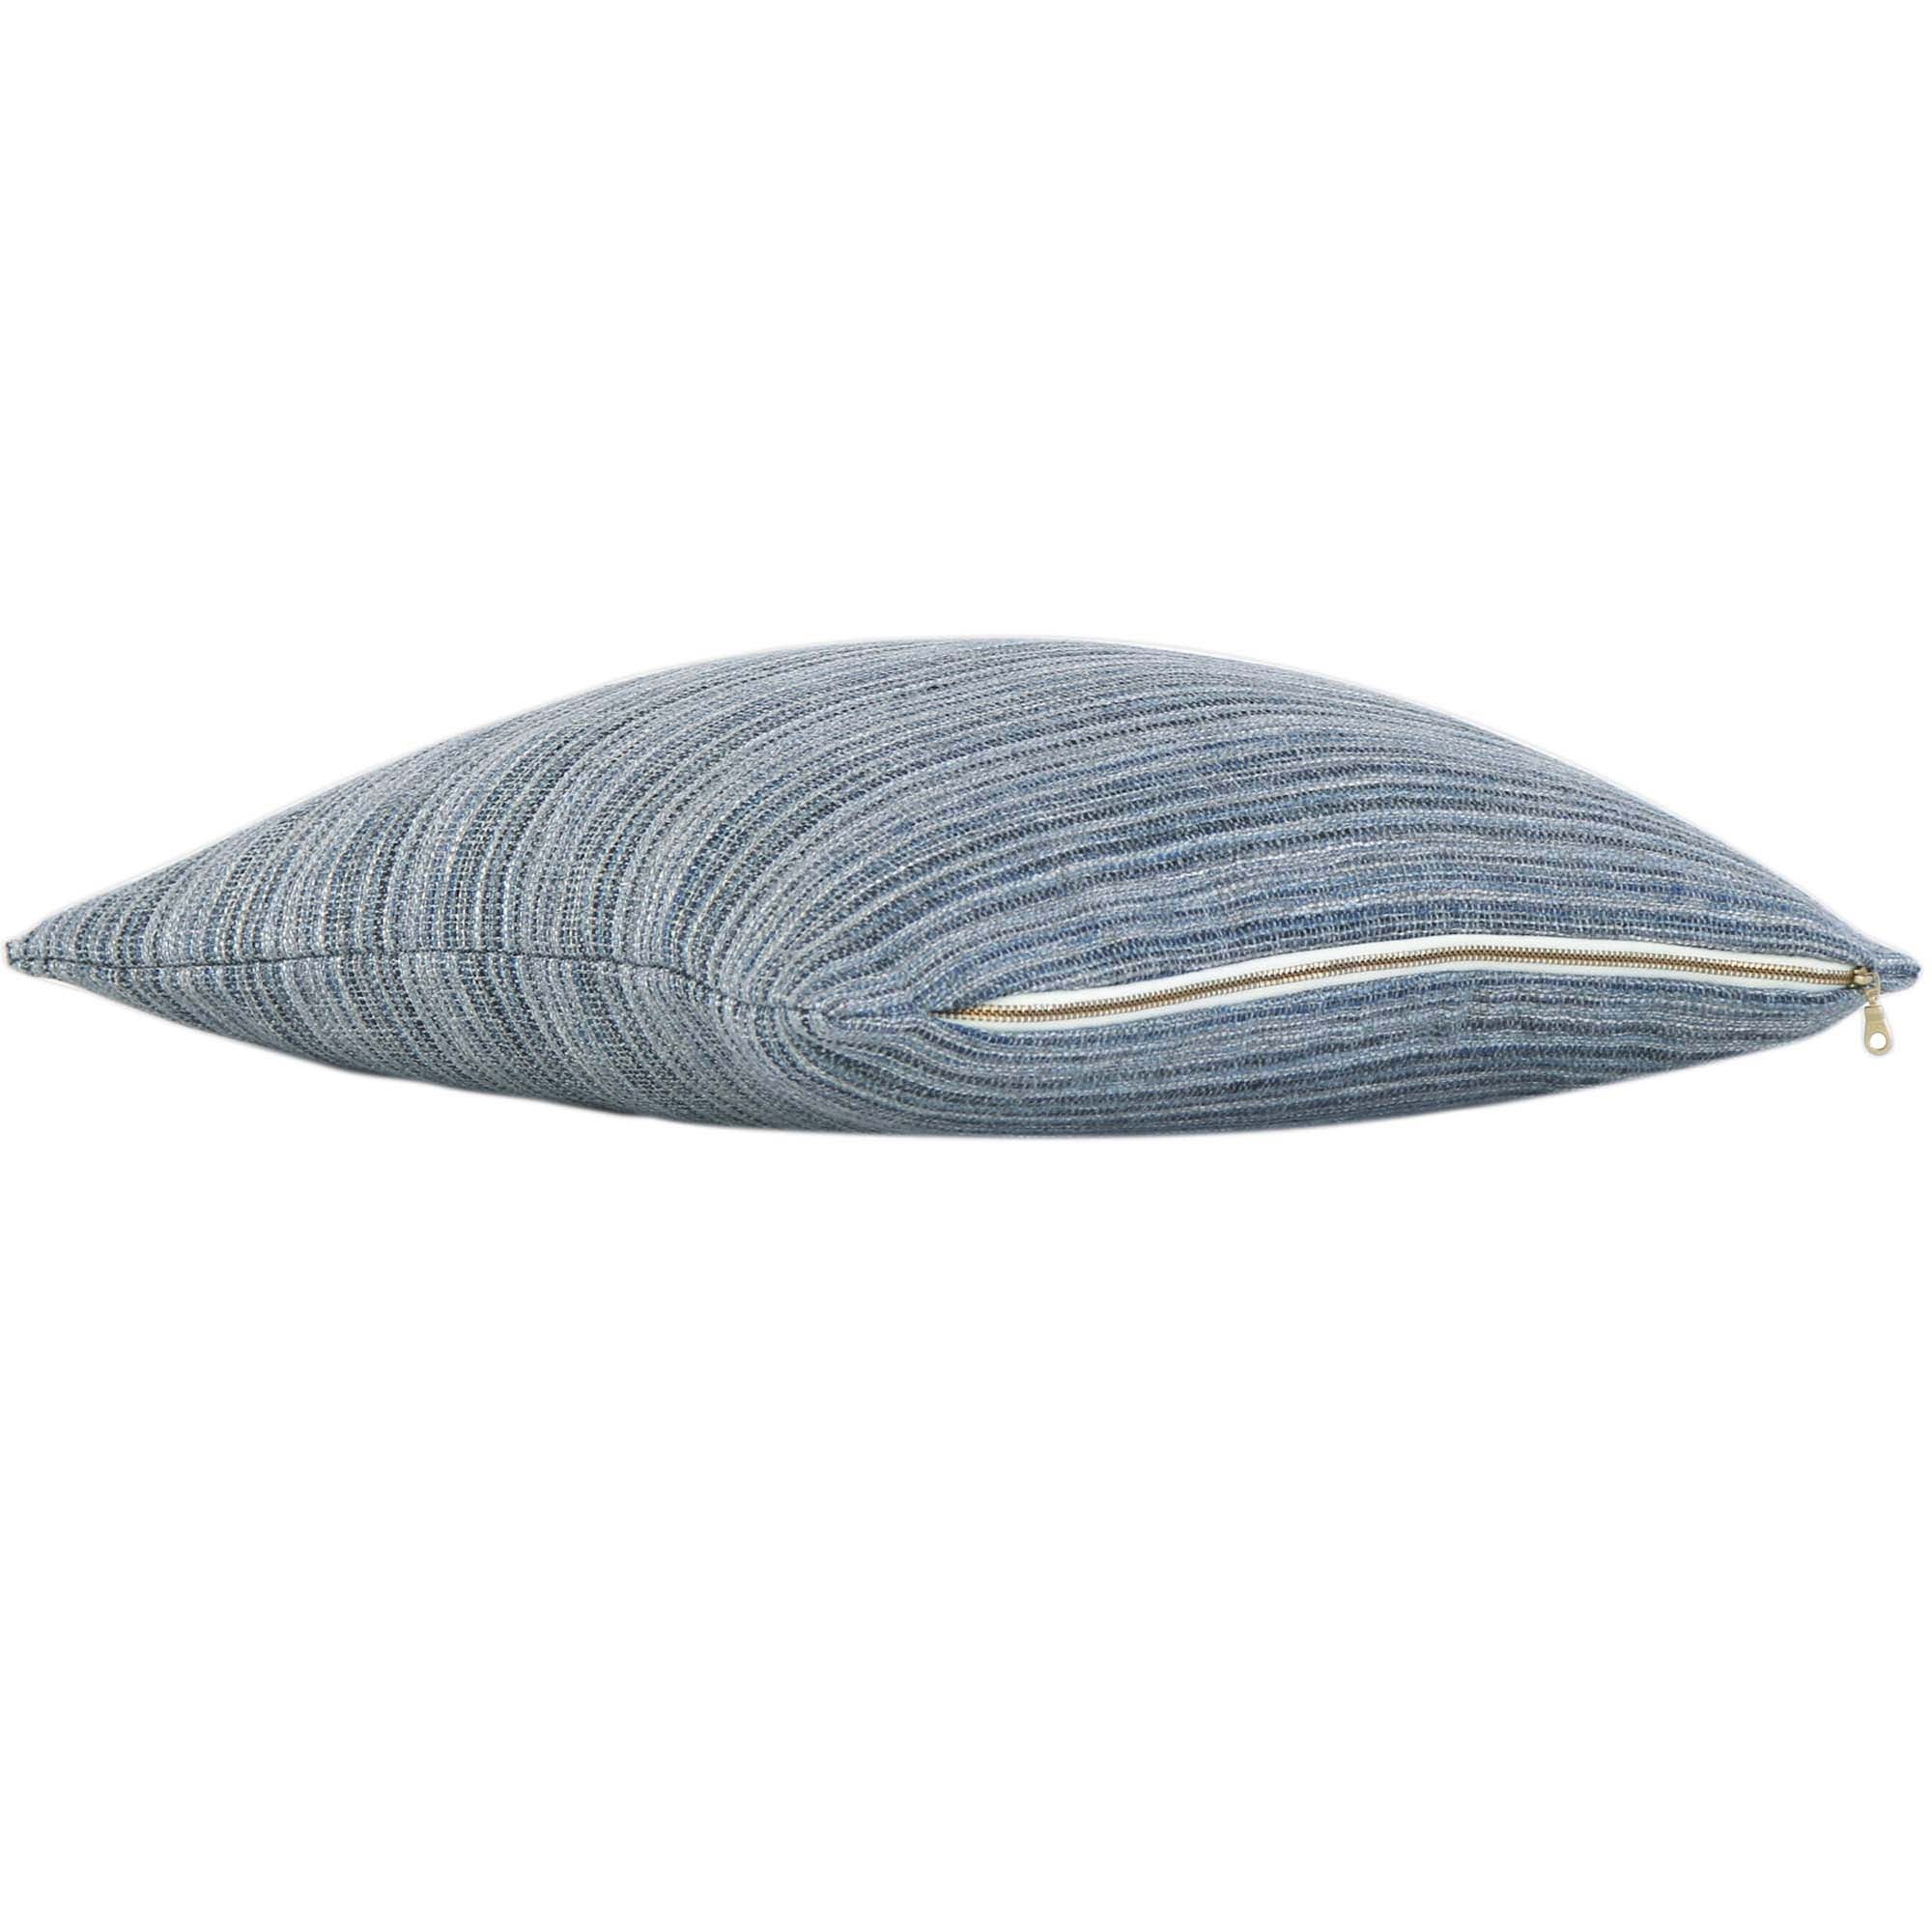 Schumacher Formentera Denim Textured Stripe Decorative Throw Pillow Cover with Exposed Brass Gold Zipper